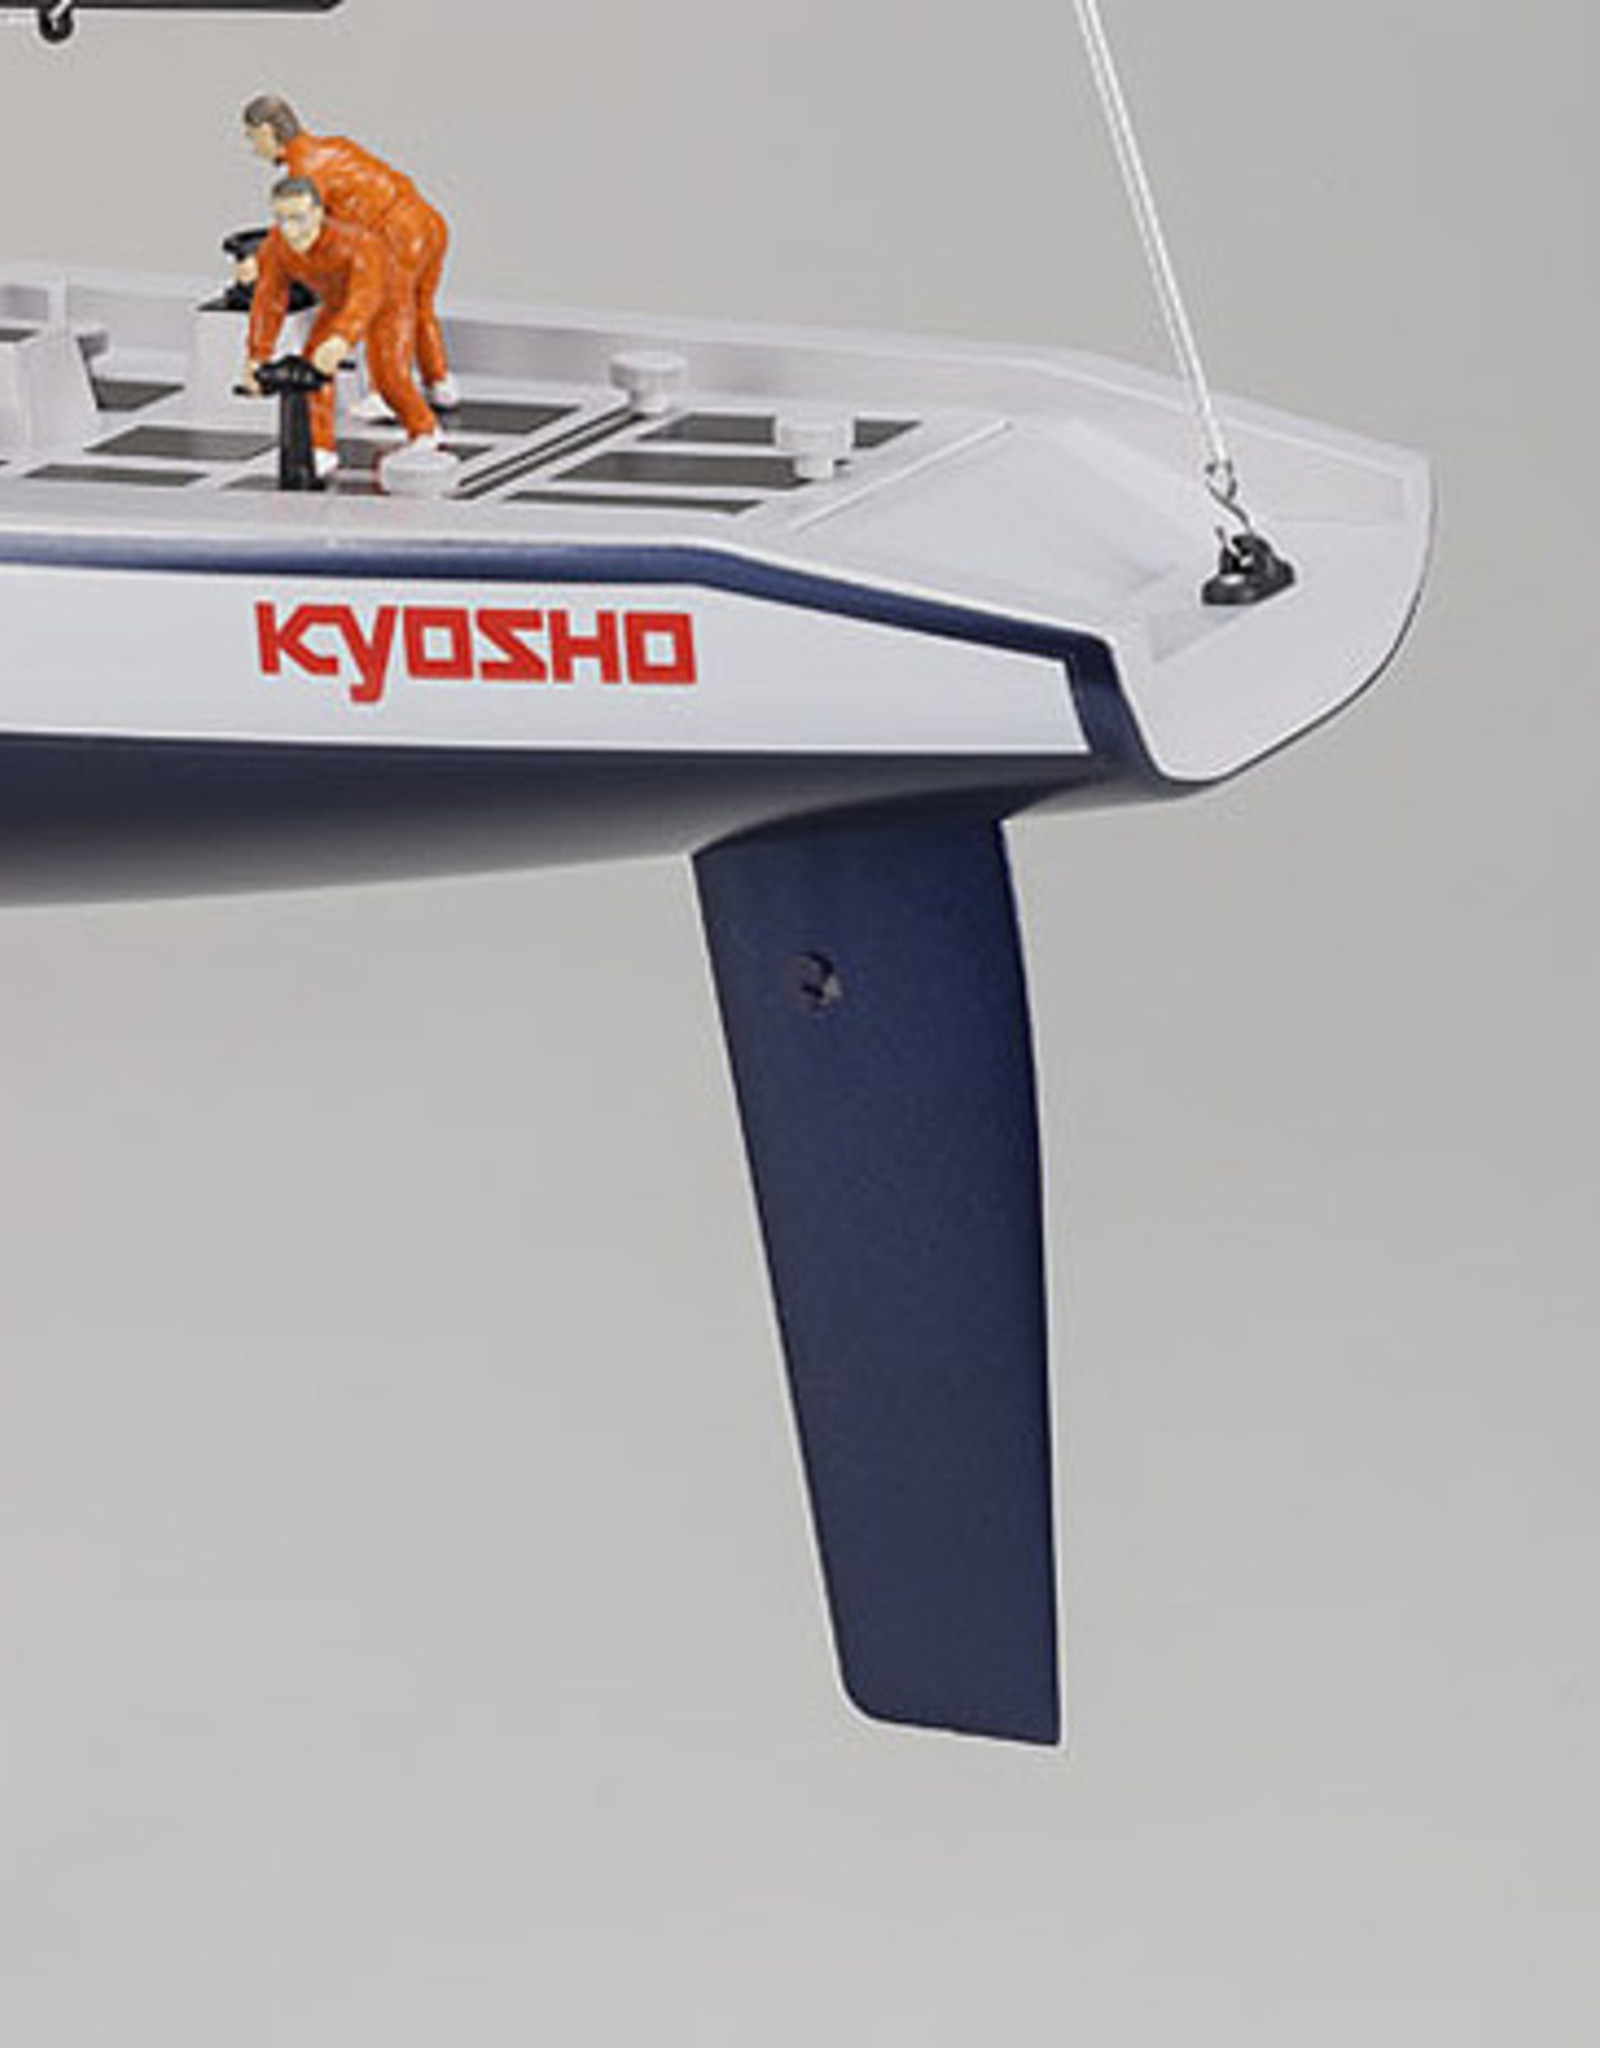 KYOSHO KYO40042s-bFORTUNE 612 III 2.4G readyset KT-431S